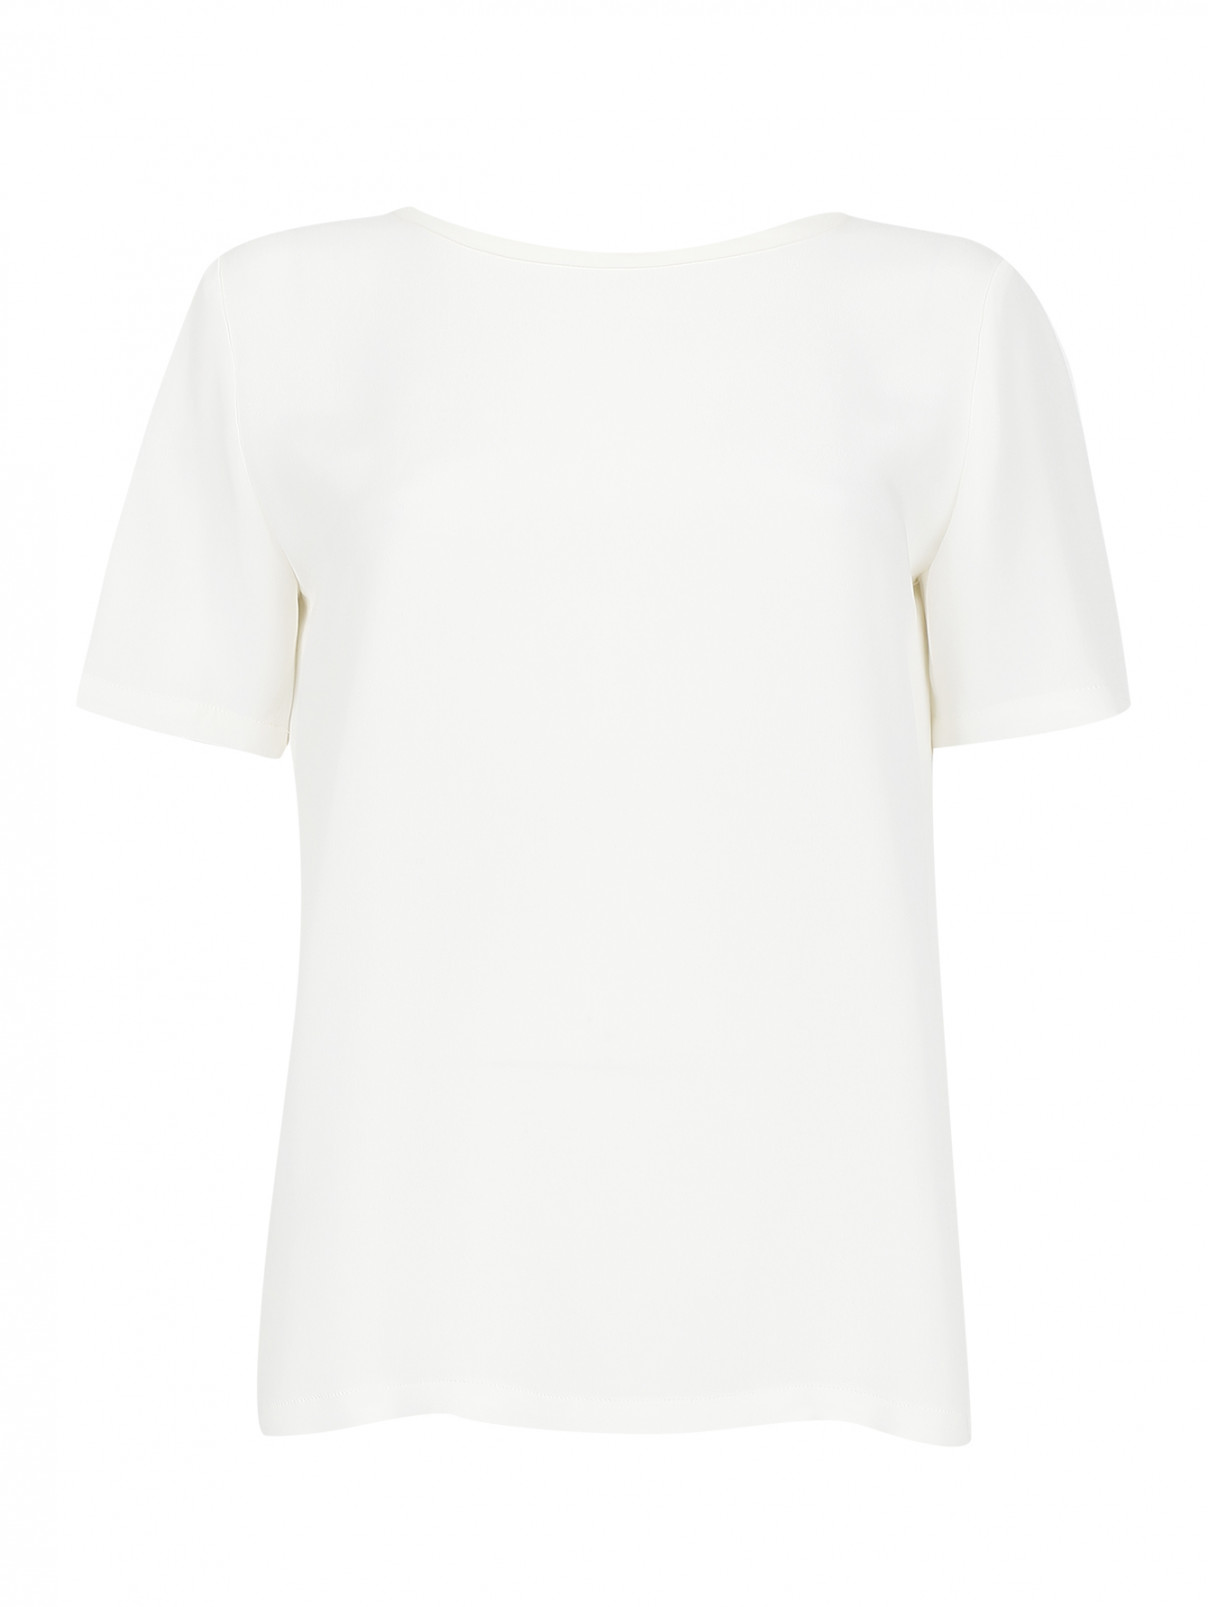 Блуза из шелка S Max Mara  –  Общий вид  – Цвет:  Белый